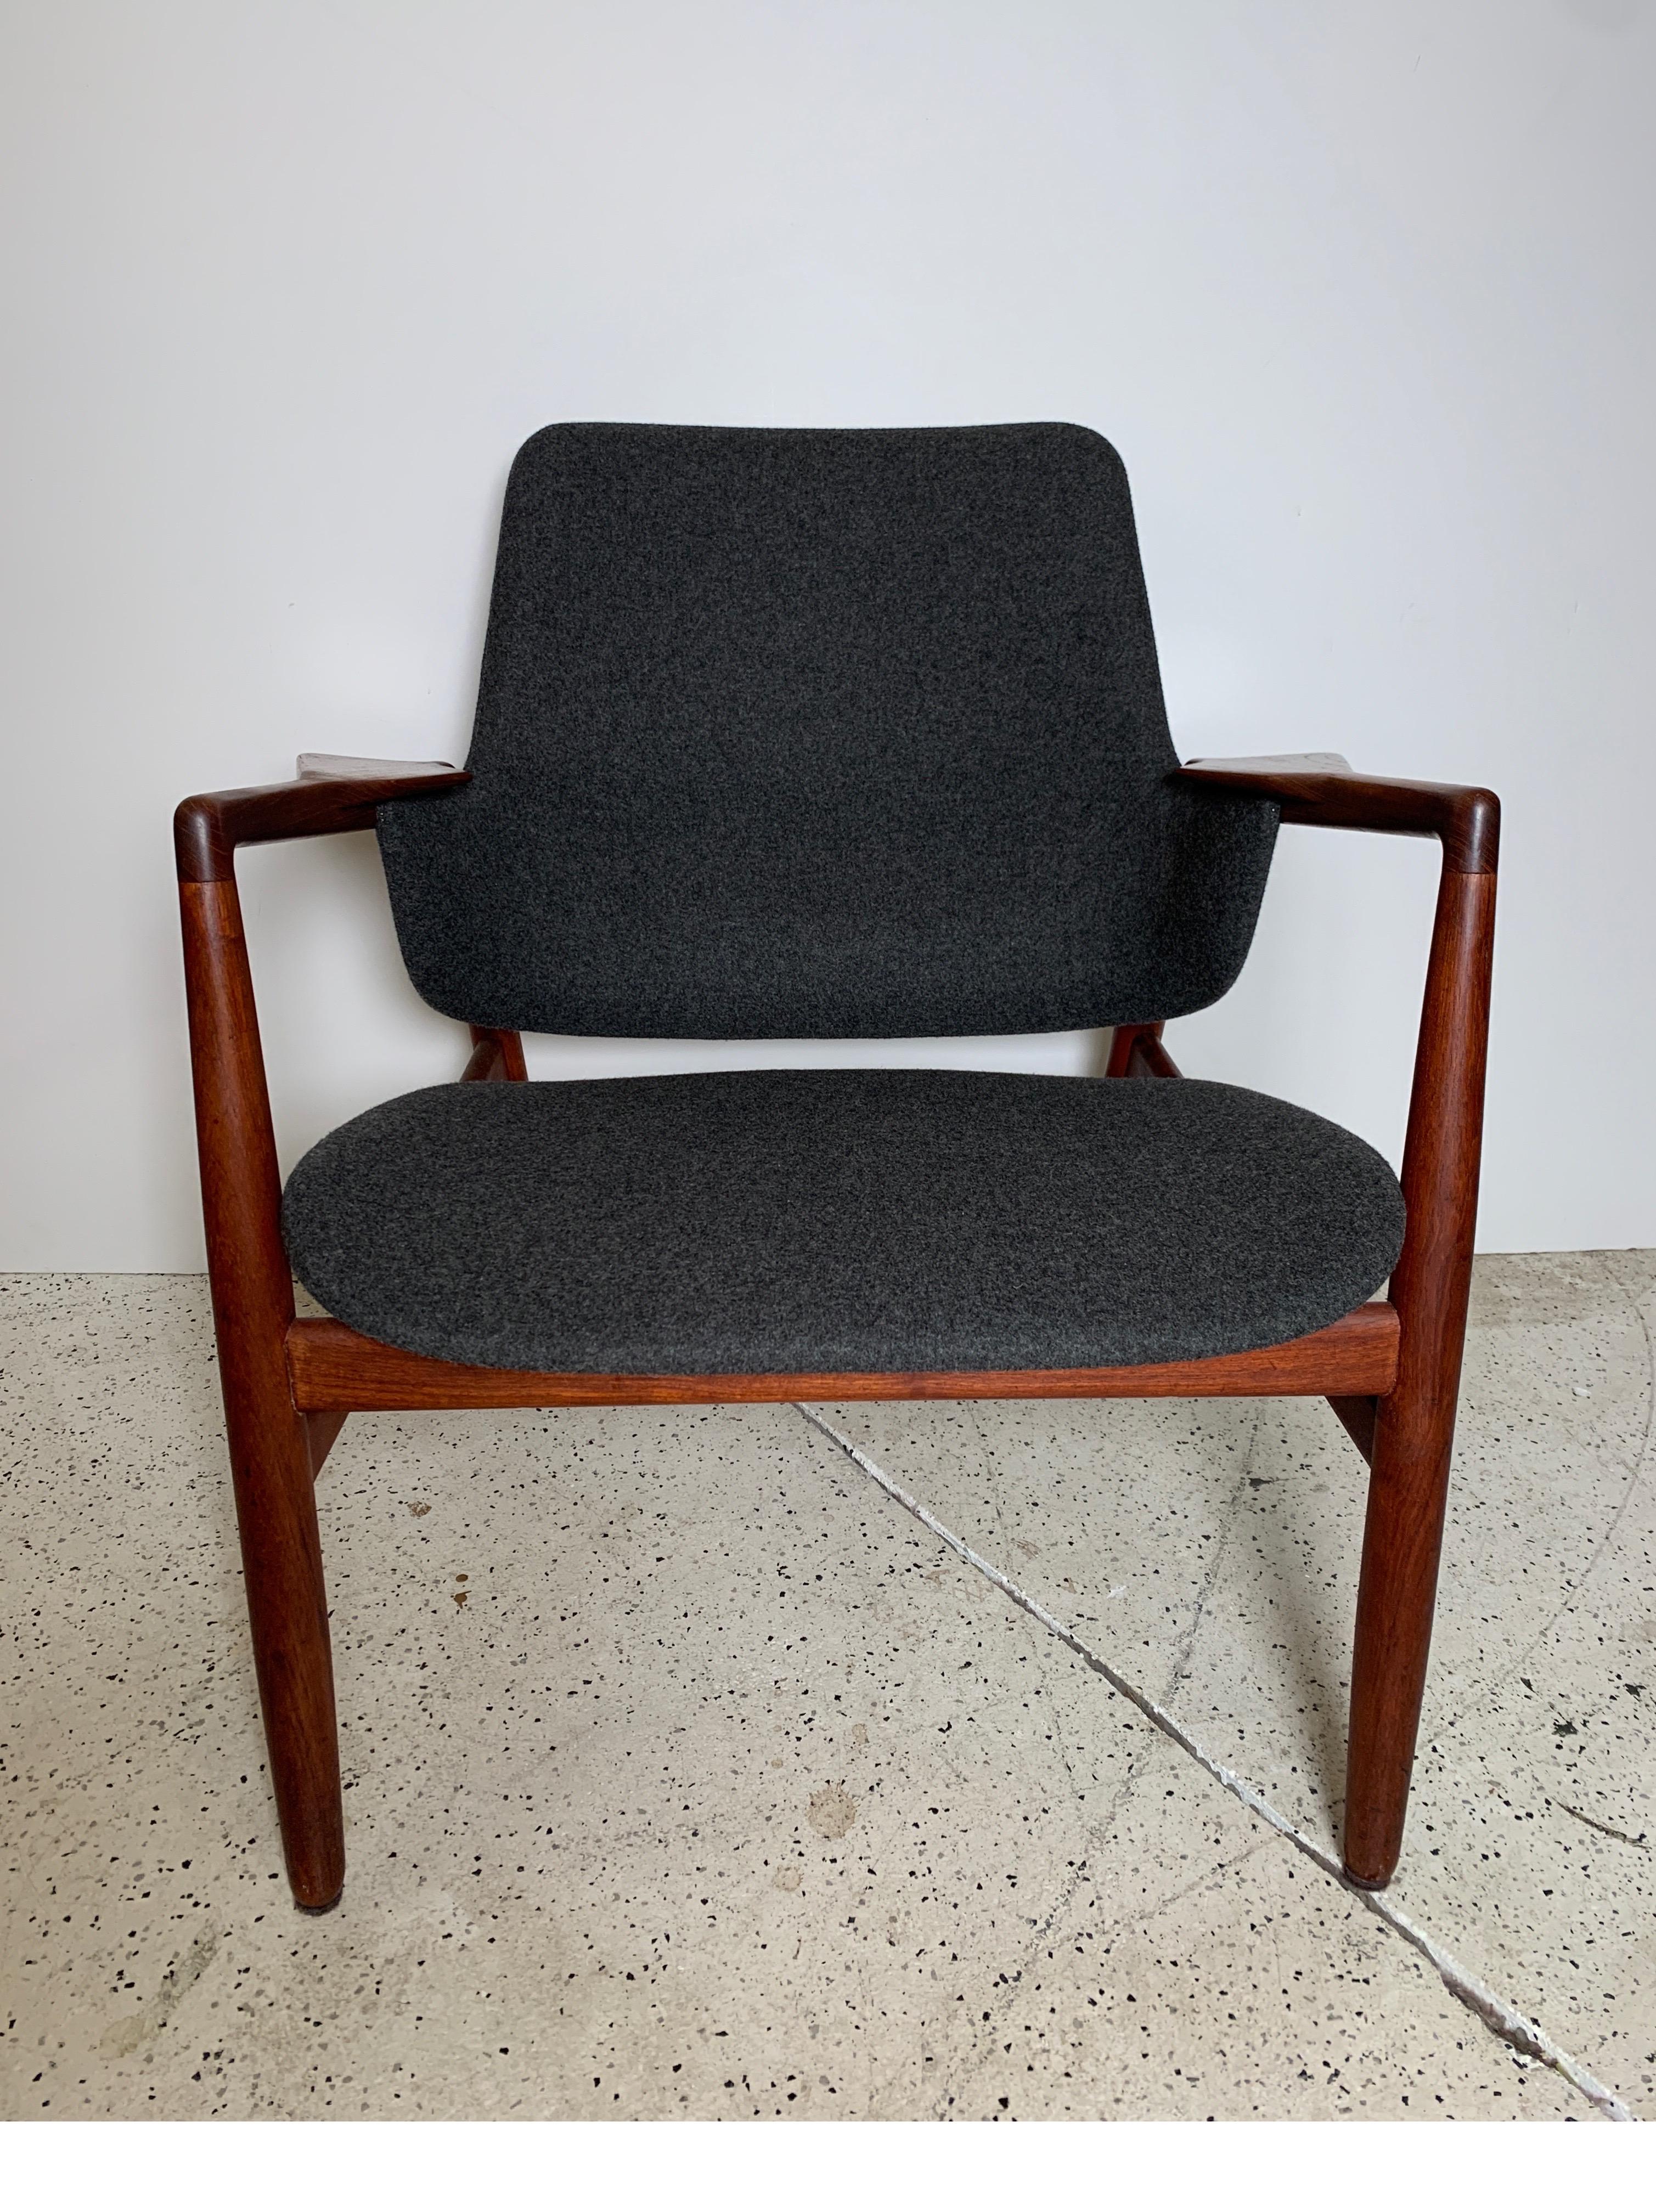 Scandinavian Modern Ib Kofod Larsen Lounge Chair in Teak by Carlo Gahrn for Bovirke, Denmark, 1953